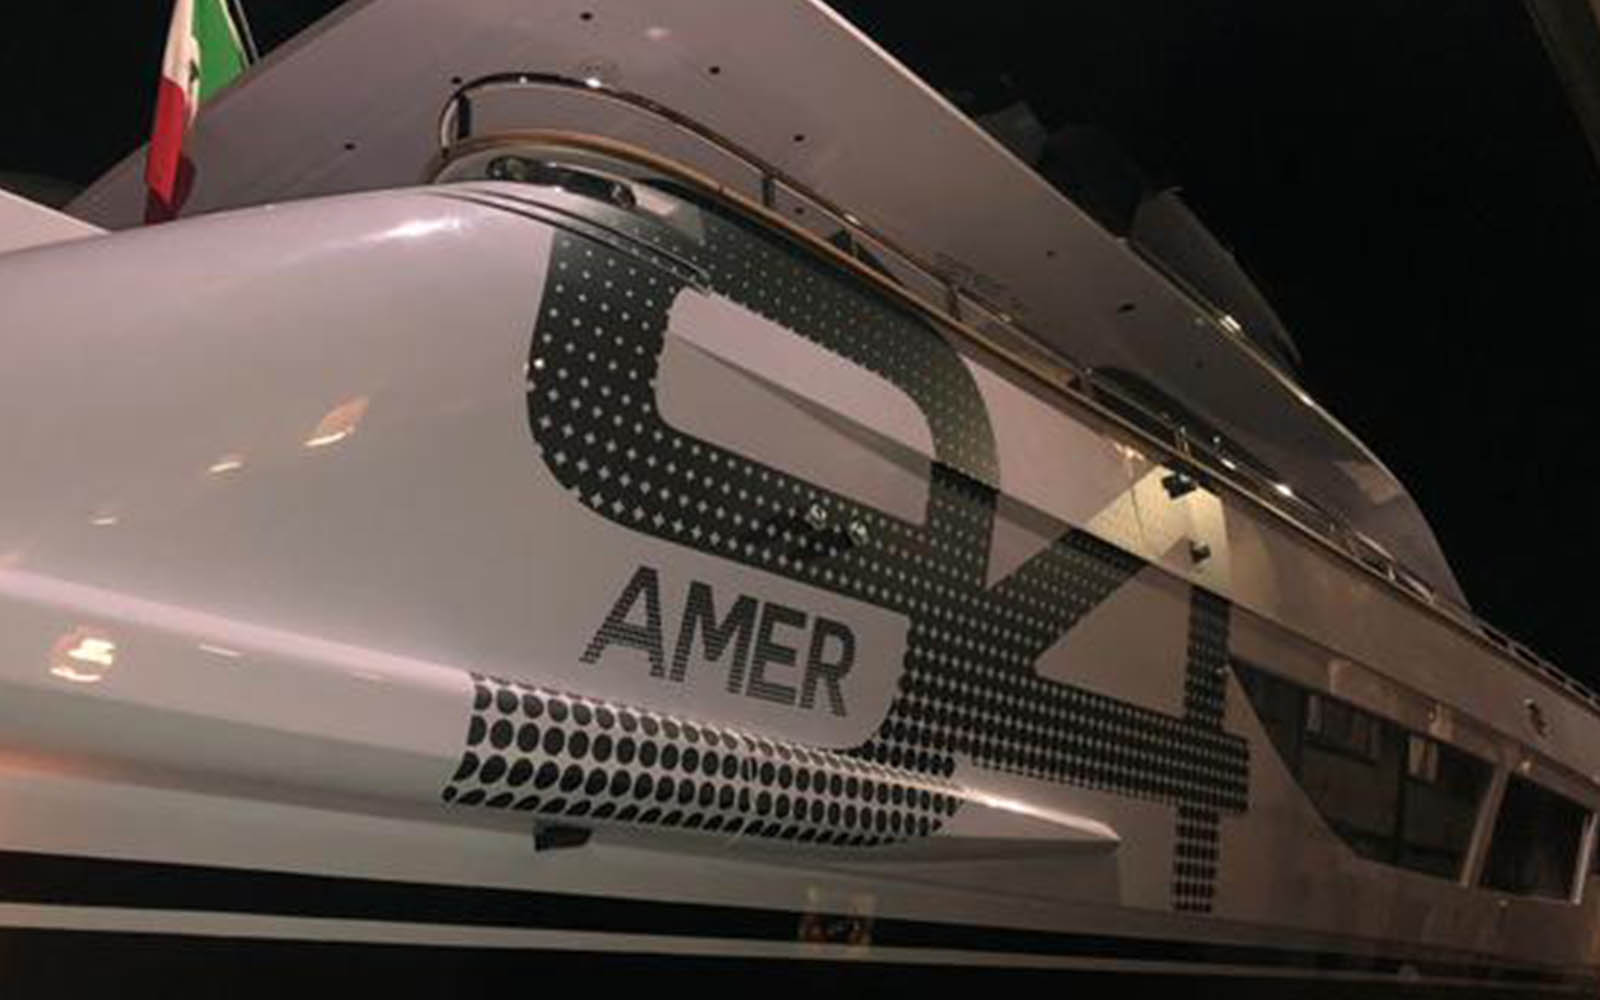 Amer 94-02-boatshopping